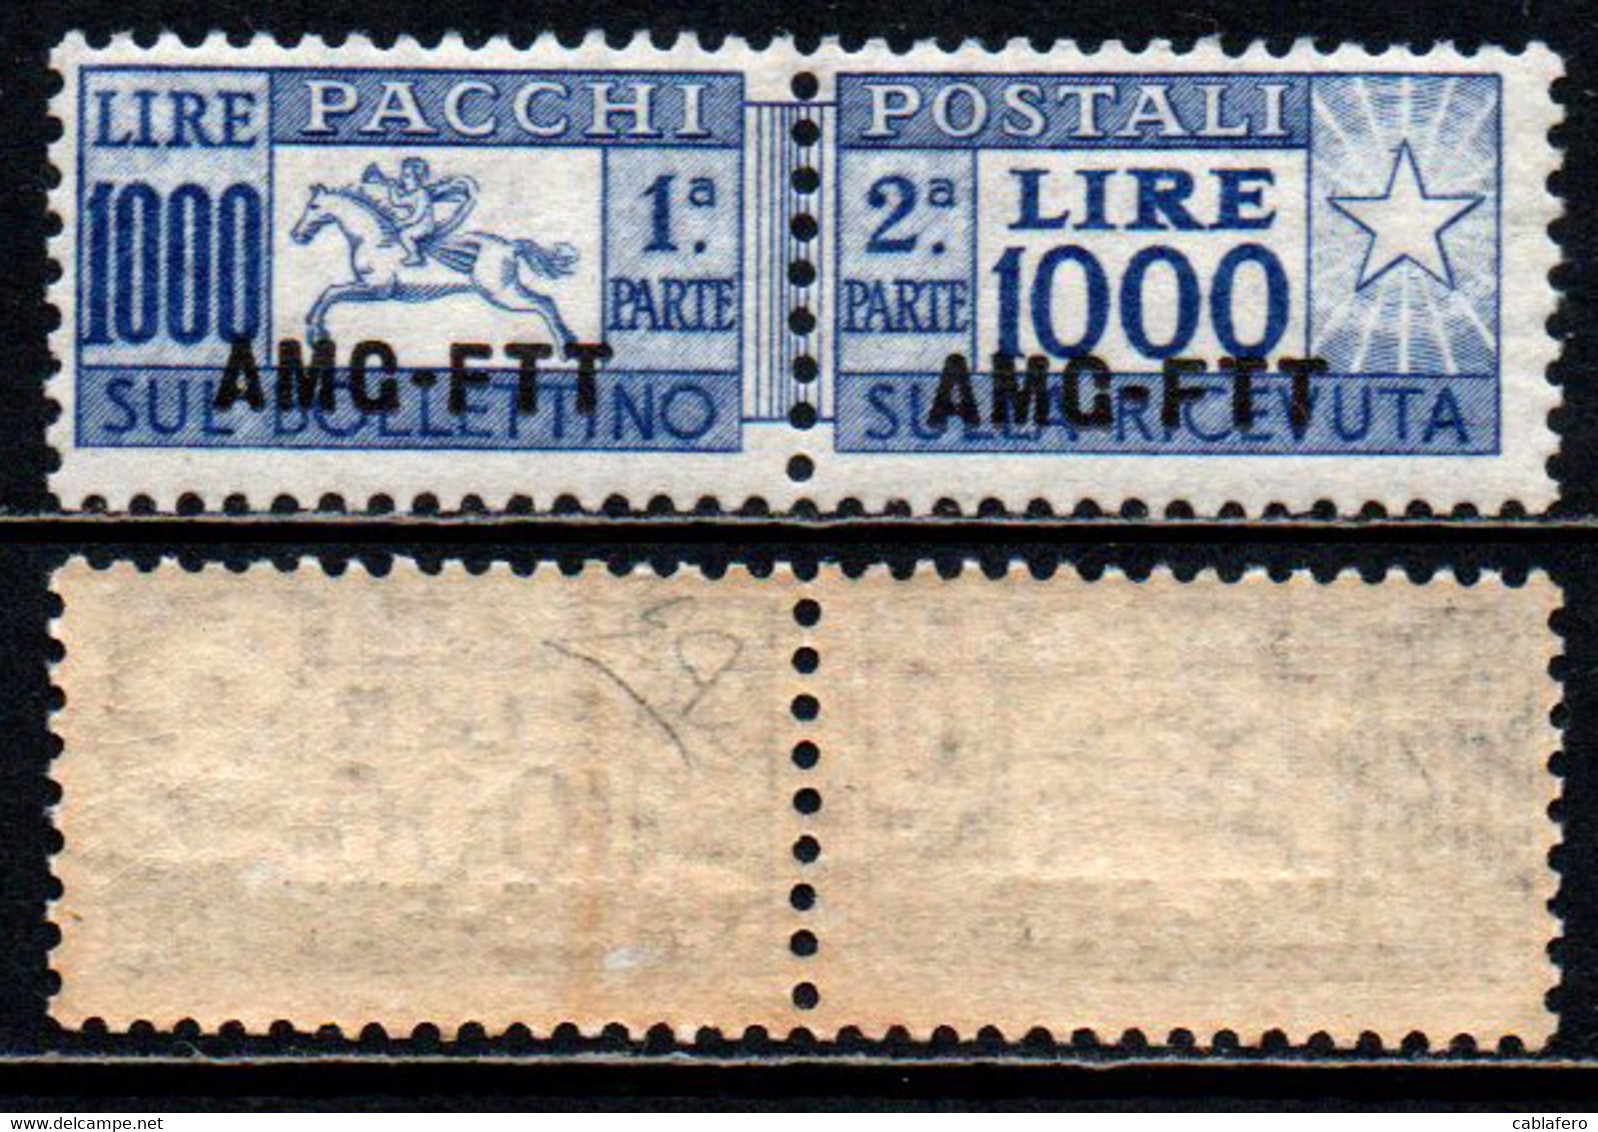 TRIESTE A - AMGFTT - 1954 - CAVALLINO CERTIFICATO DIENA - PACCHI POSTALI - SOVRASTAMPA SU UNA LINEA -  1000 LIRE - MNH - Postpaketen/concessie